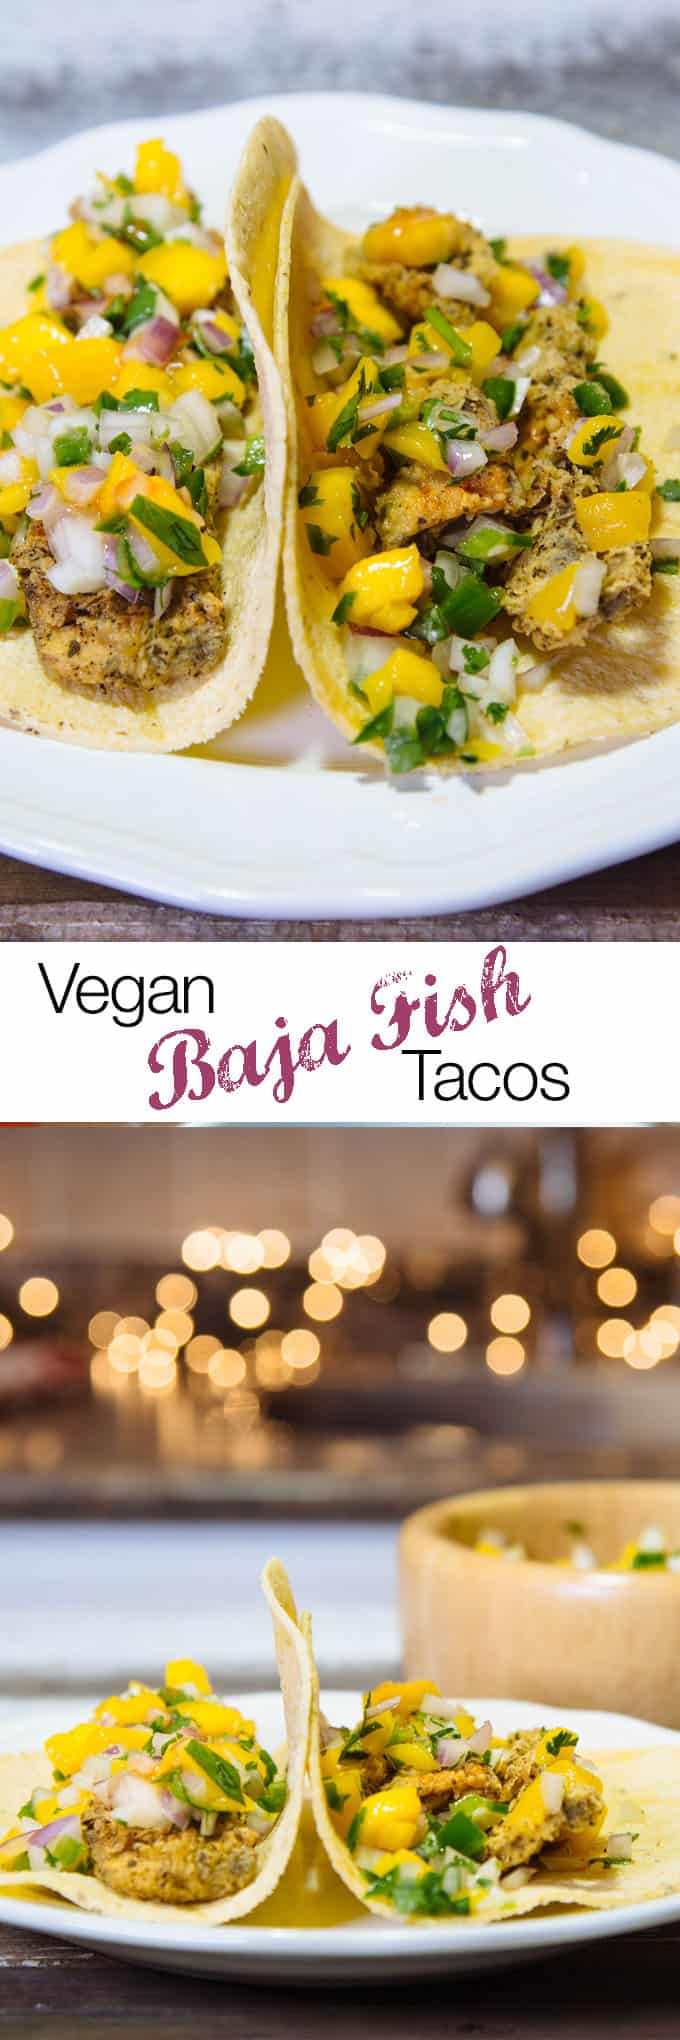 Vegan fish tacos recipe